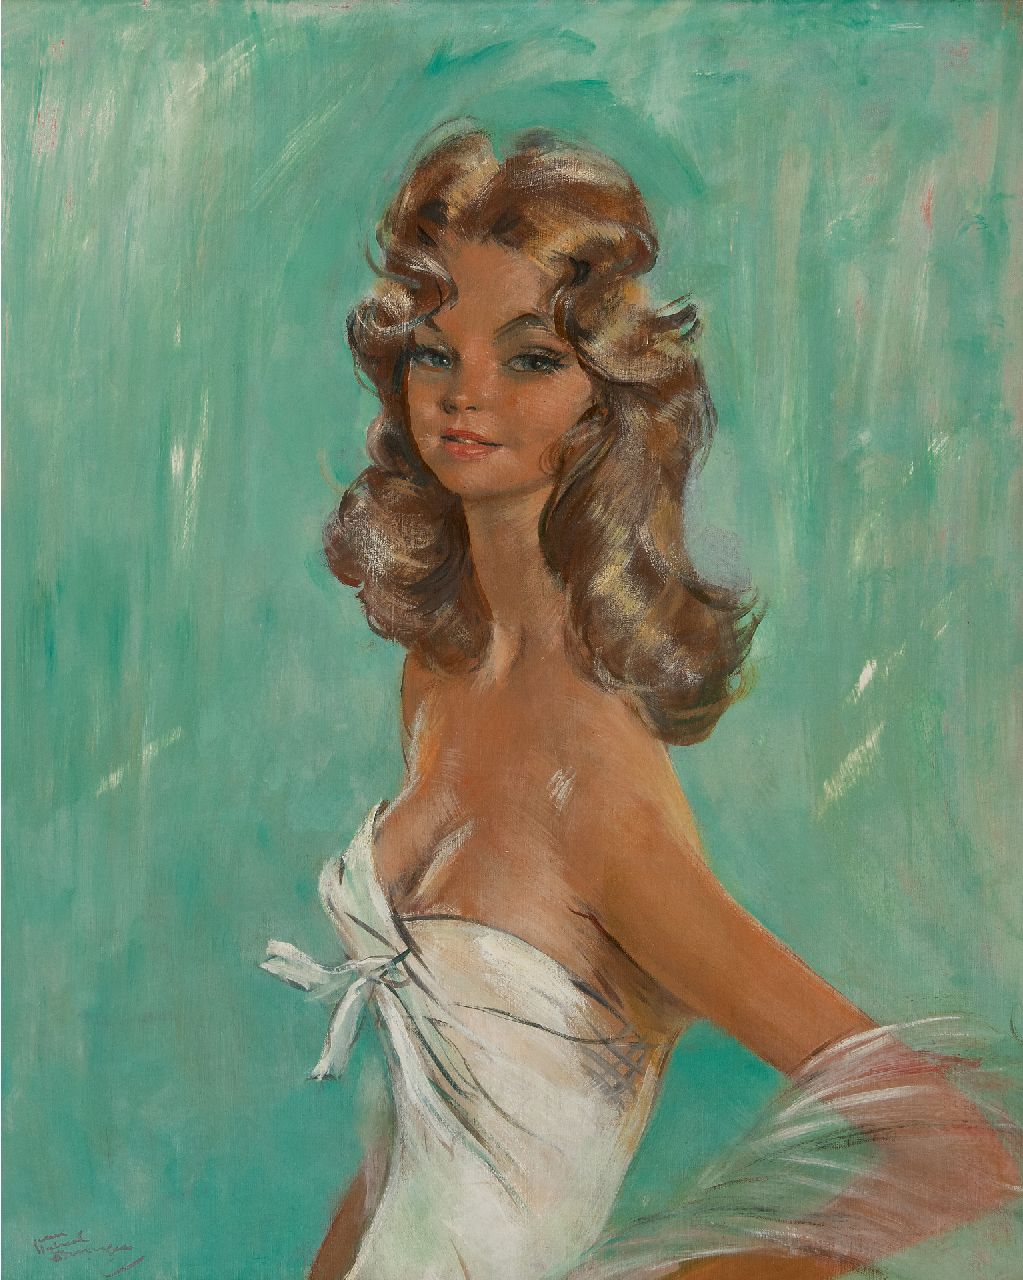 Domergue J.G.  | Jean-Gabriel Domergue | Schilderijen te koop aangeboden | Blond meisje in witte jurk, olieverf op doek 81,0 x 65,0 cm, gesigneerd linksonder